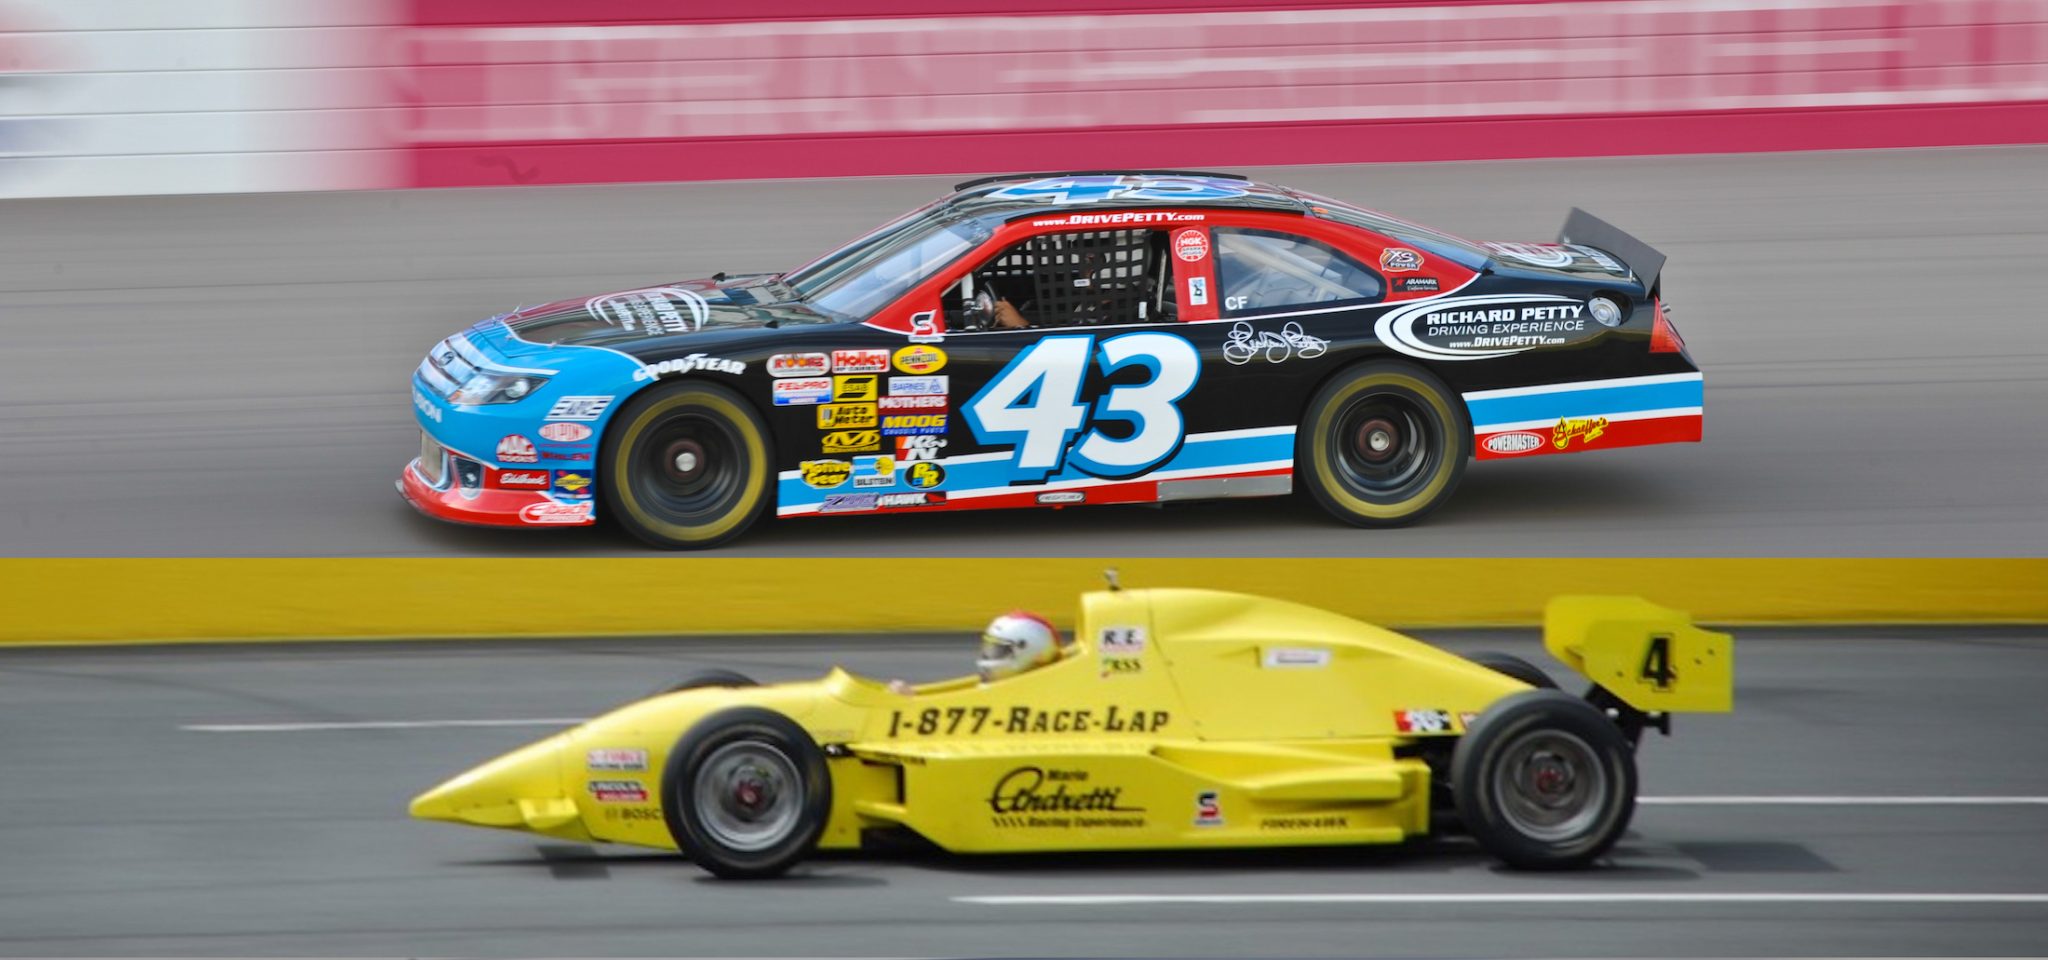 Richard Petty, NASCAR and Mario Andretti Racing Experience Las Vegas